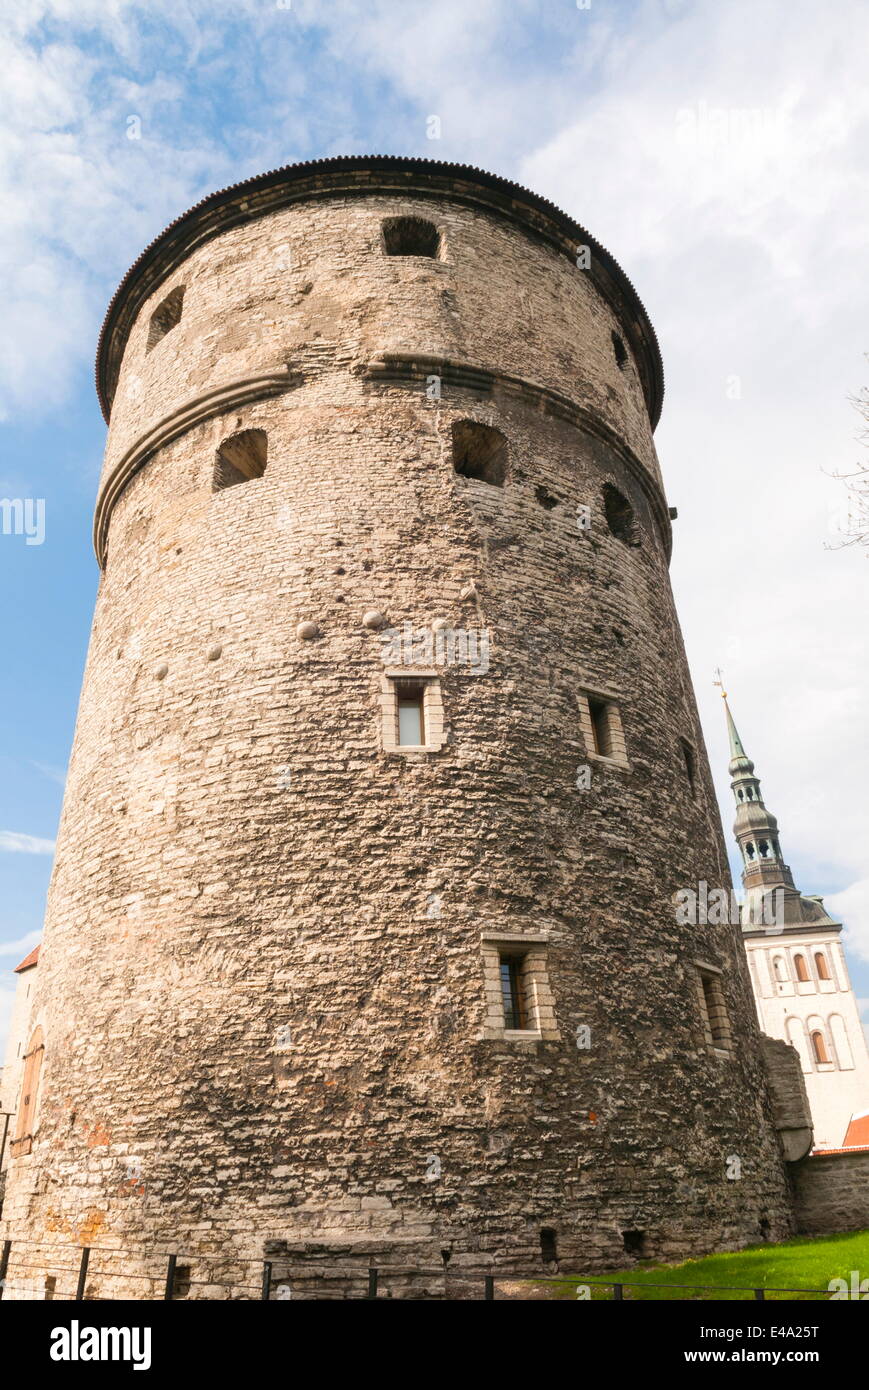 Kiek in de Kok torre, Sito Patrimonio Mondiale dell'UNESCO, Tallinn, Estonia, paesi baltici, Europa Foto Stock